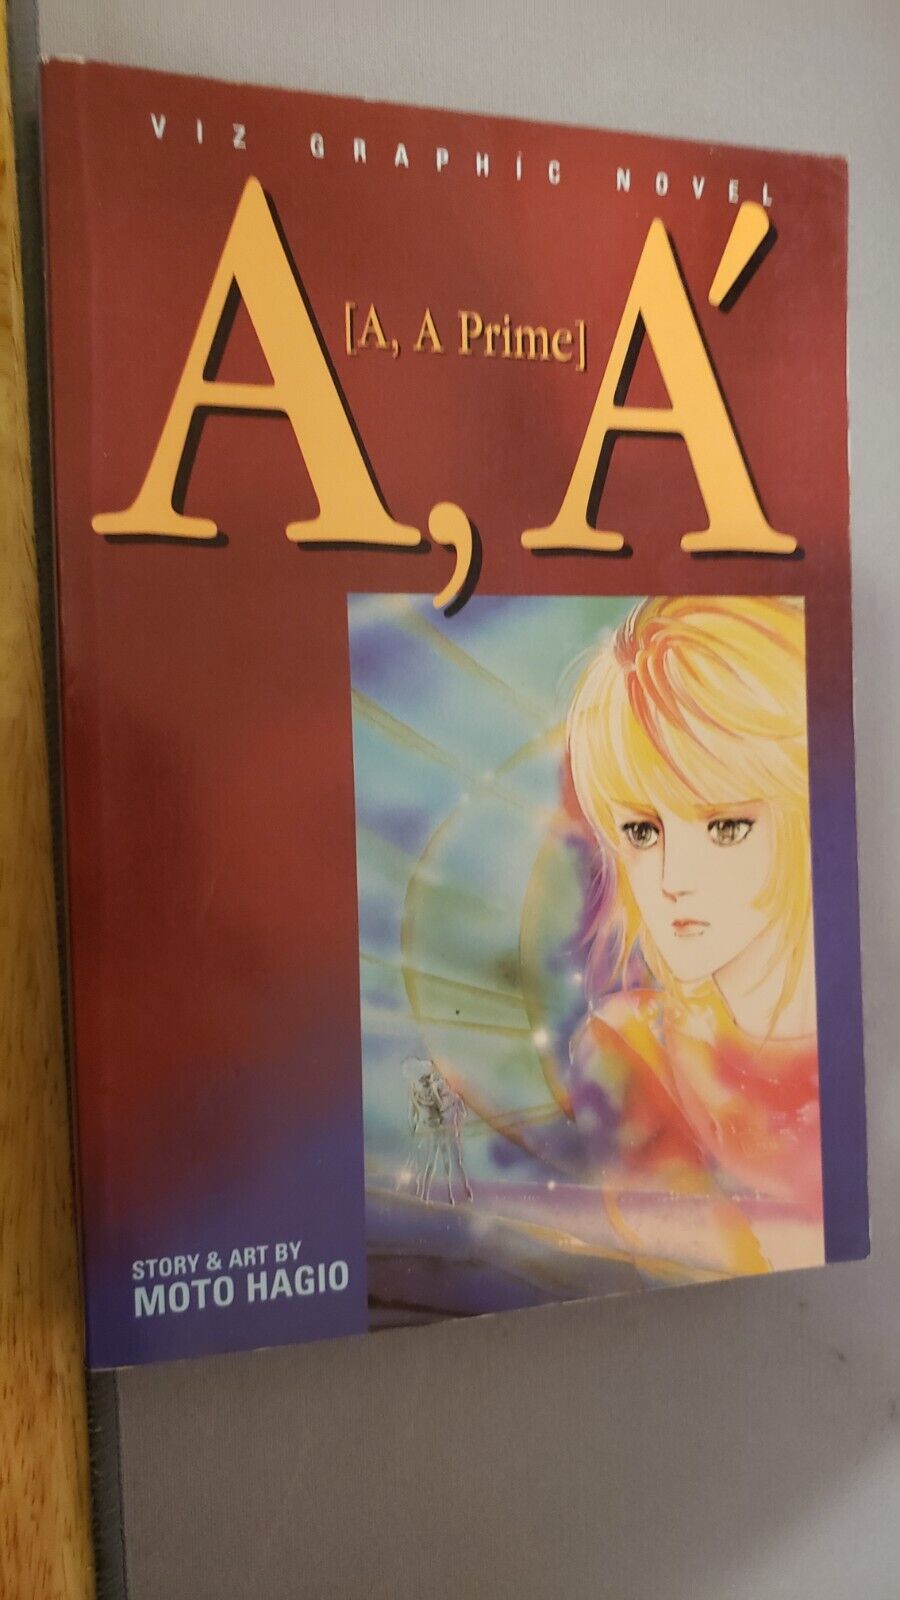 A, A\' [A, A Prime] VIZ Graphic Novel October 1997 Moto Hagio Shojo Manga